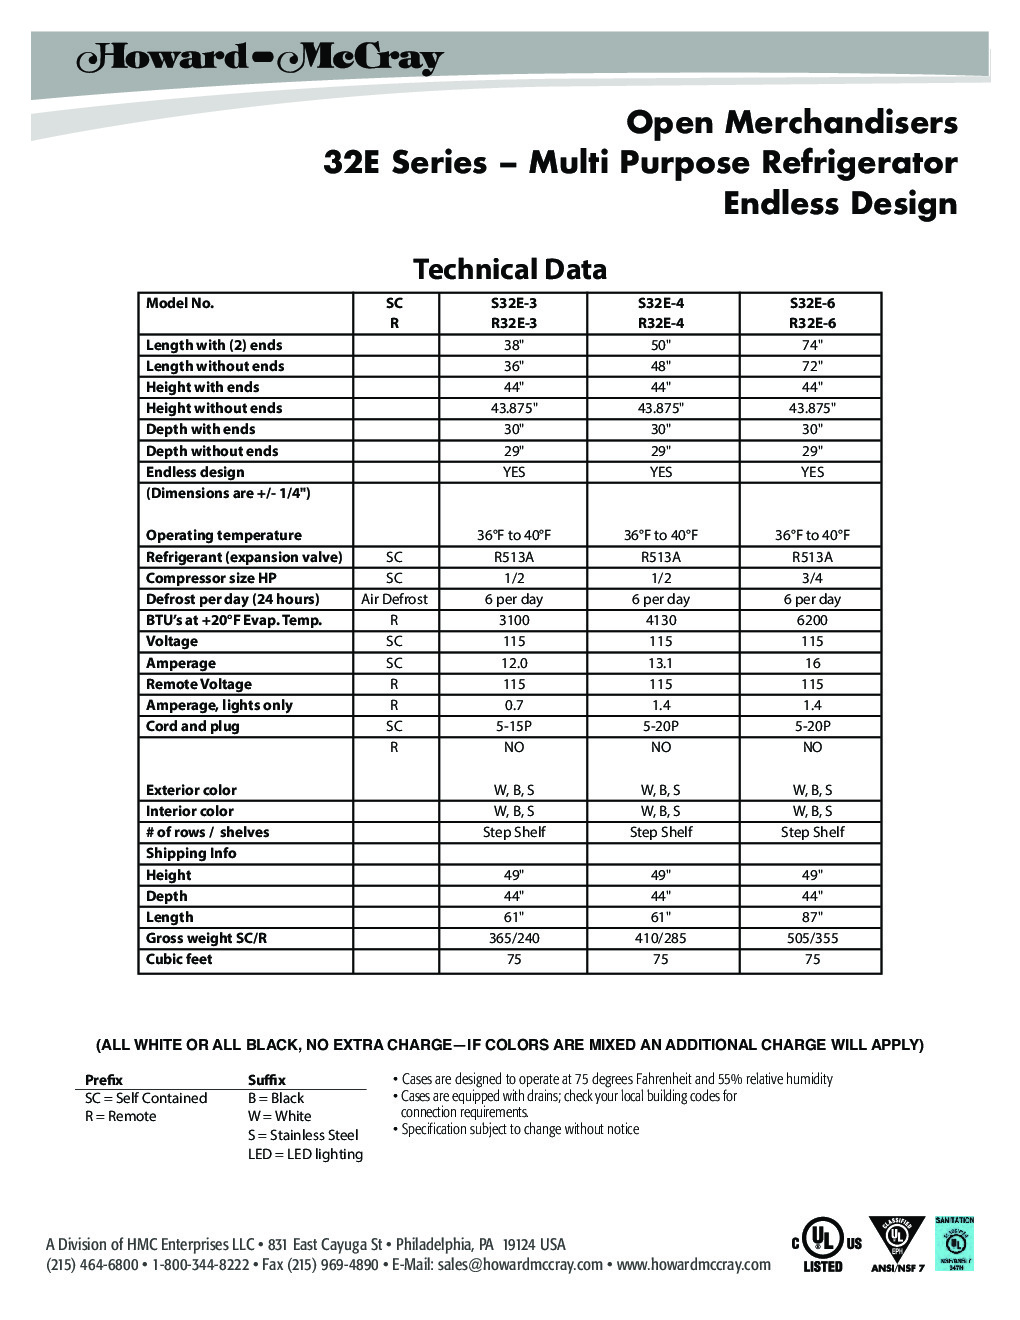 Howard-McCray S32E-4-S Open Refrigerated Display Merchandiser